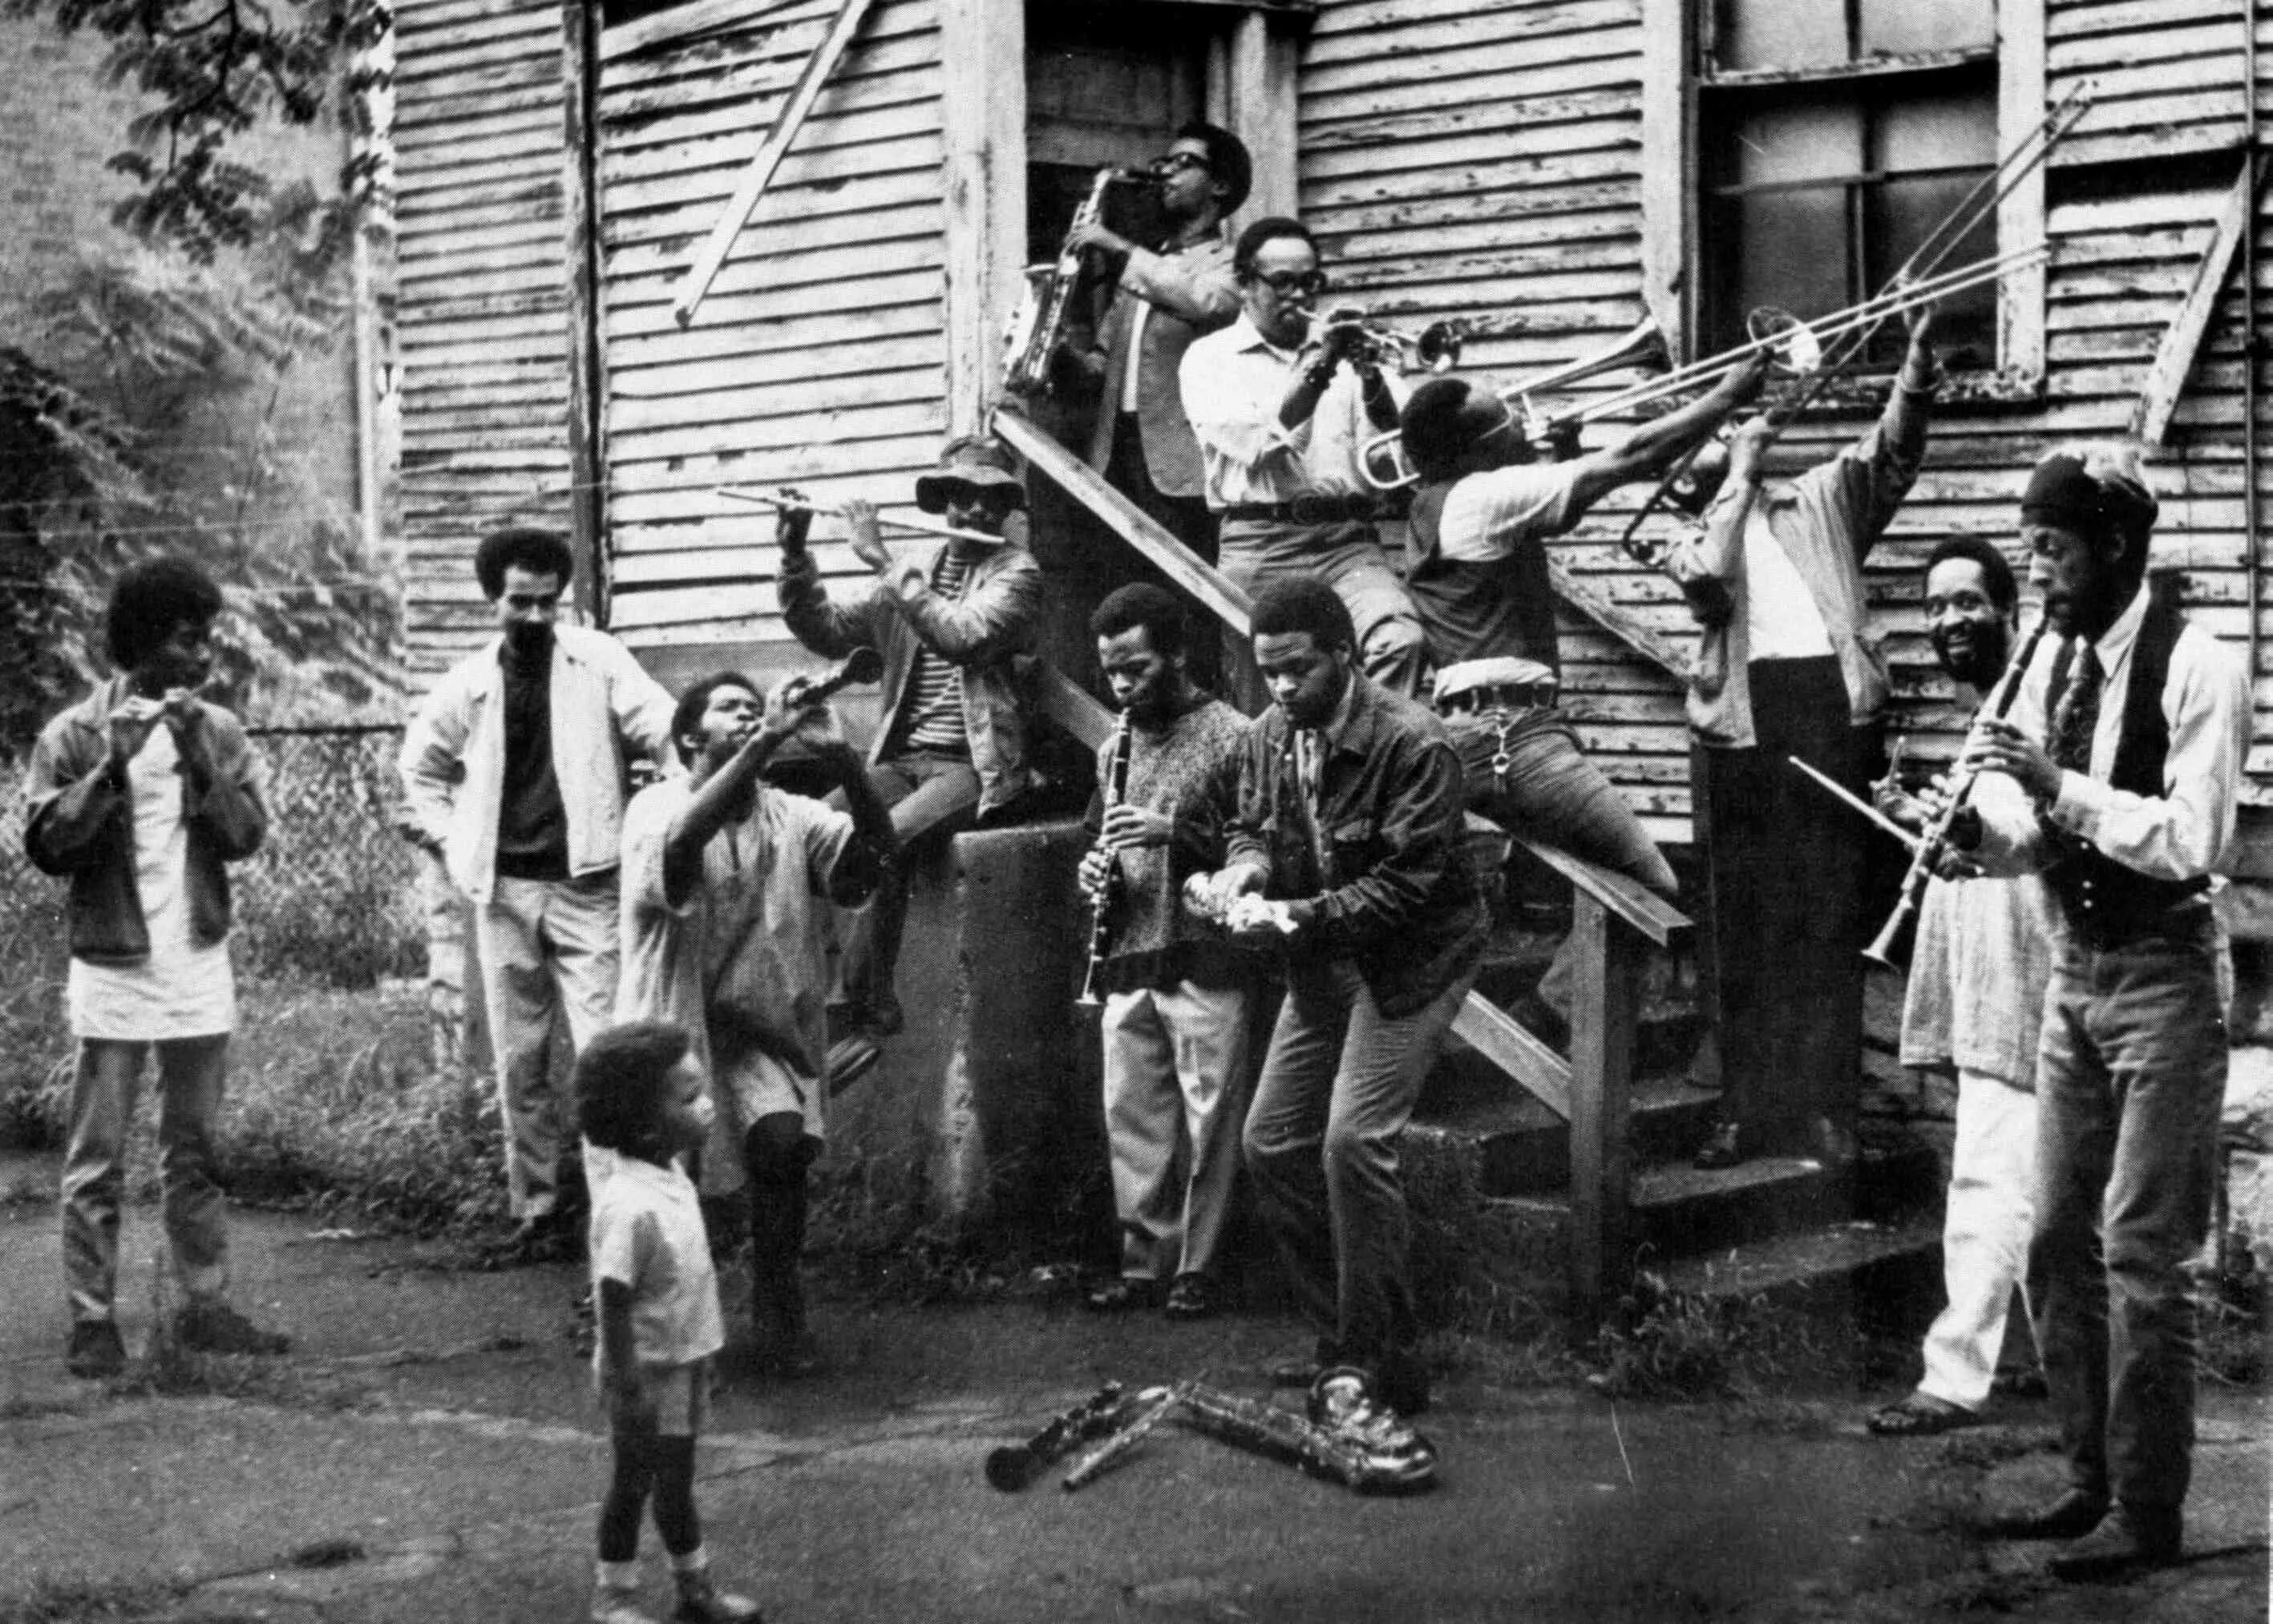 Песня 1 америка. Джаз 19 век. Джаз афроамериканцы начало 20 века. Джаз рабы. Америка в эпоху джаза.